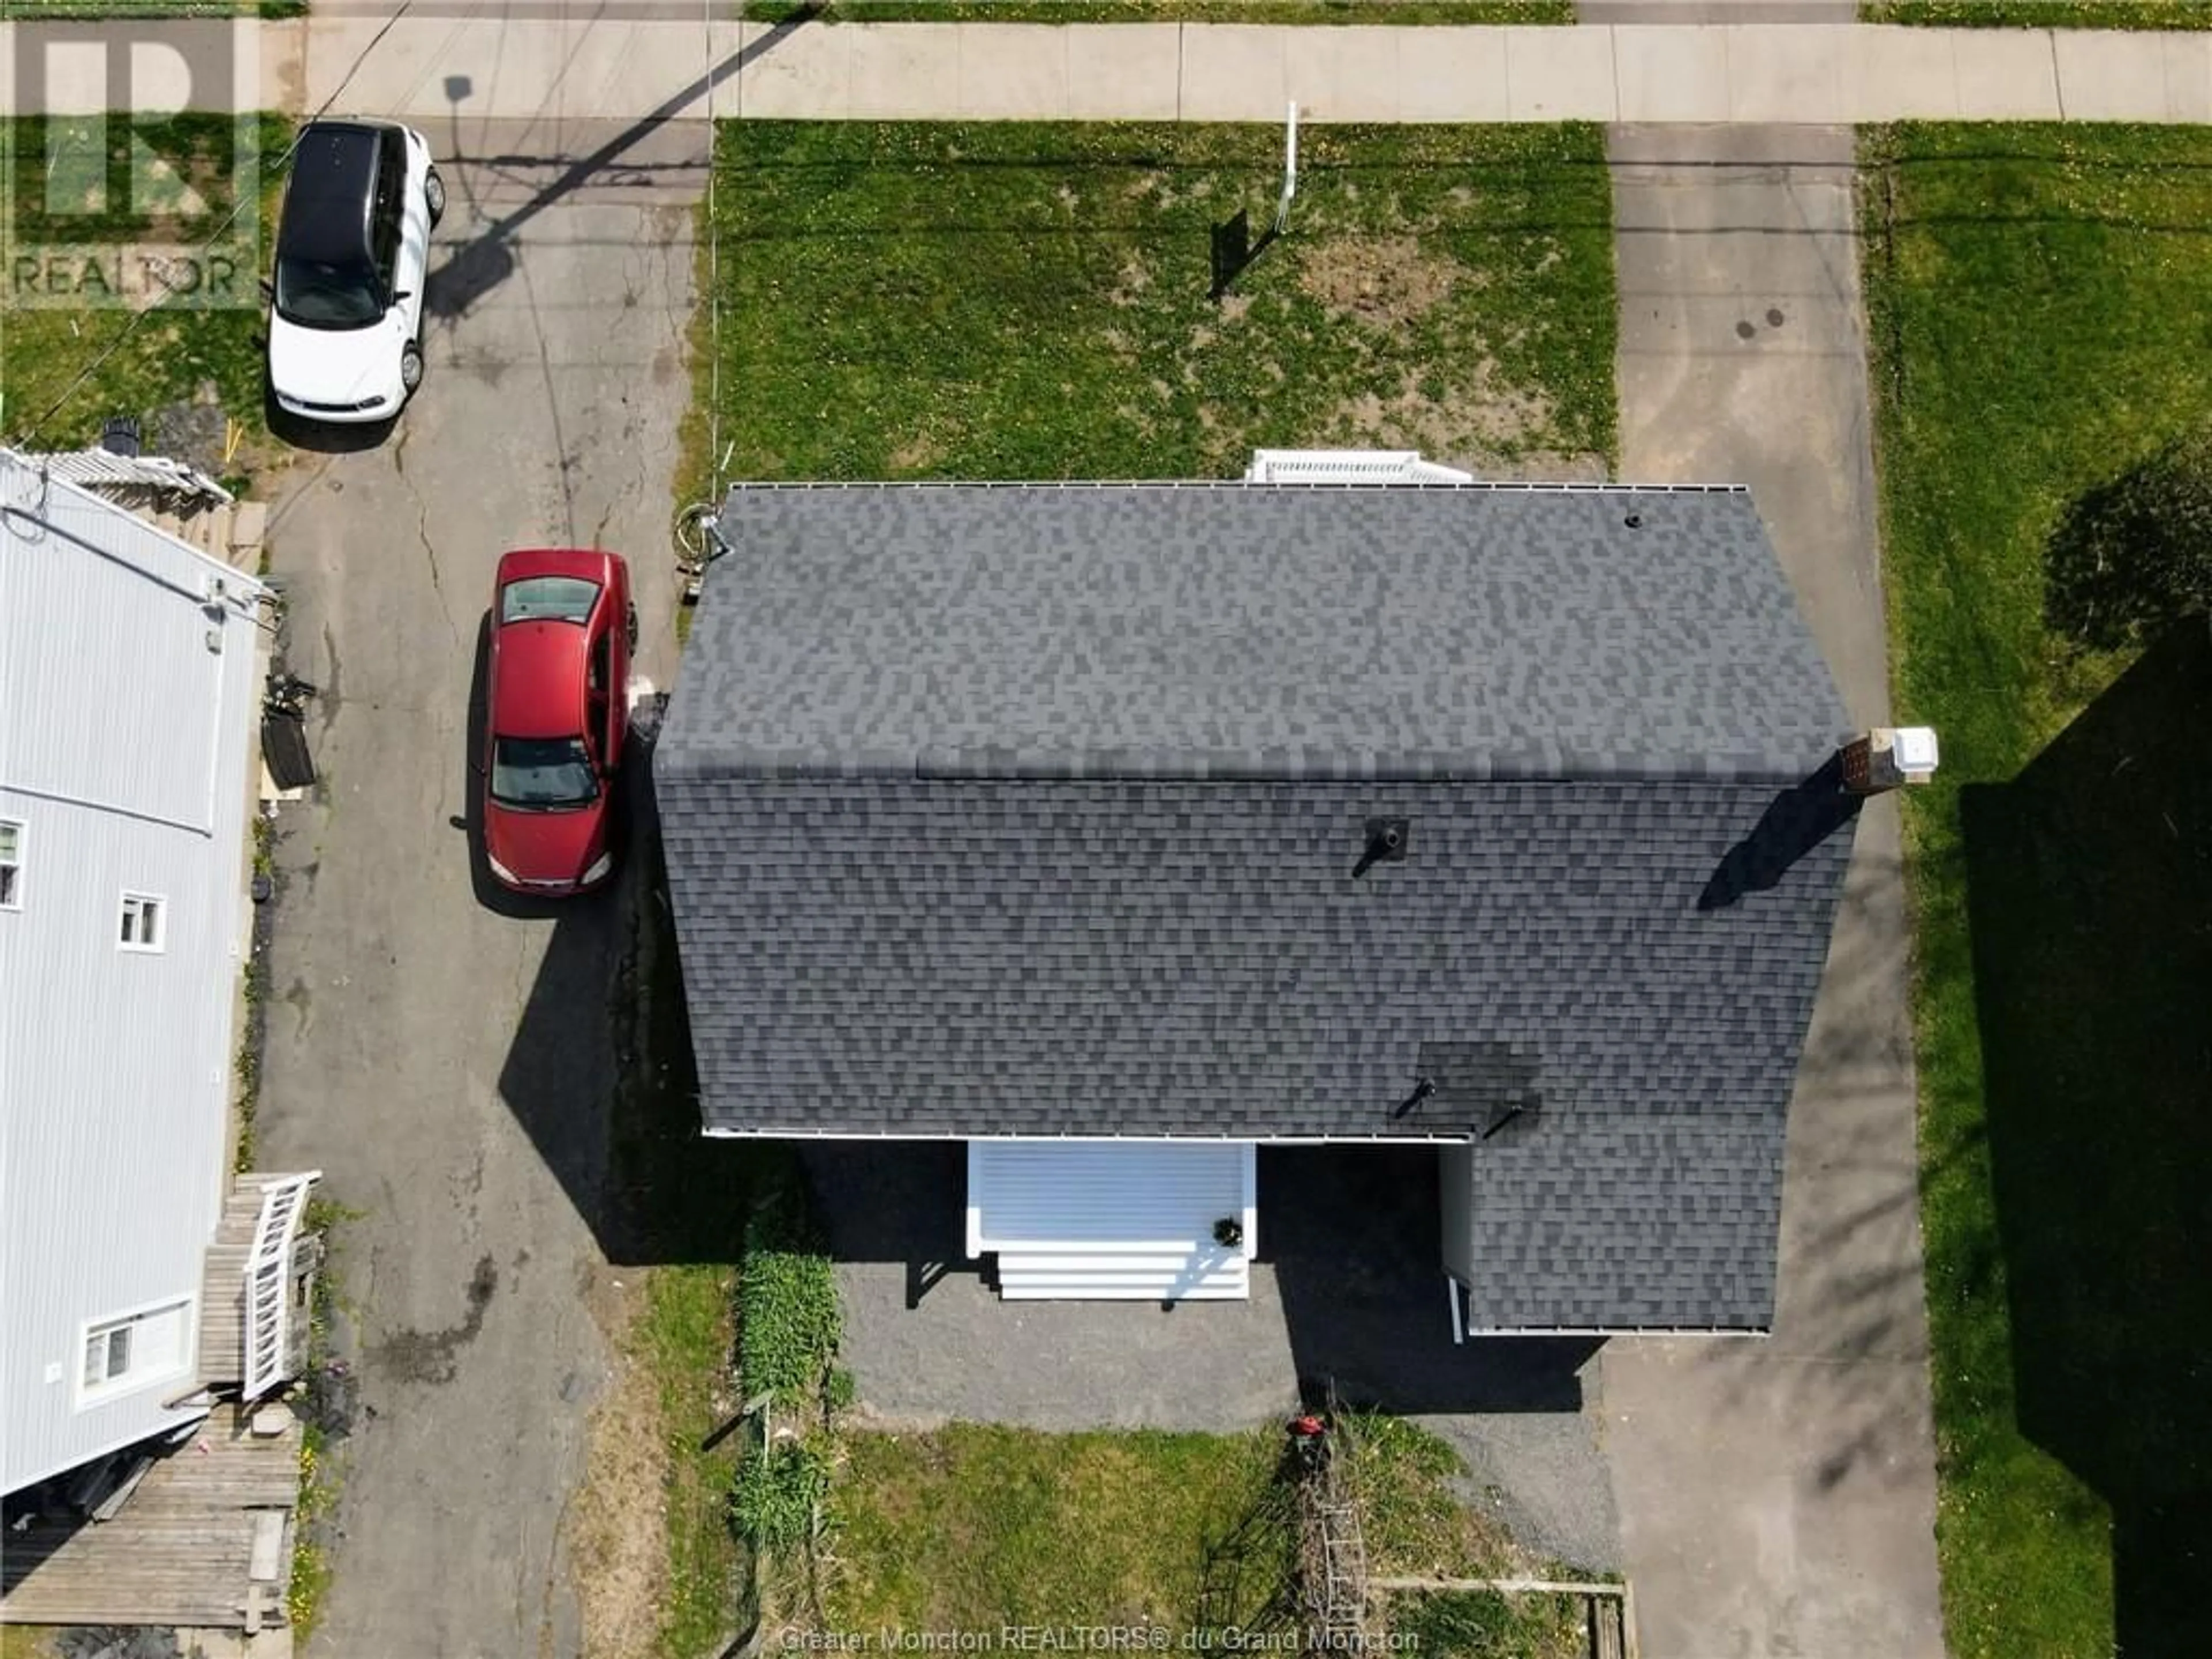 Frontside or backside of a home for 124 Waverley, Moncton New Brunswick E1C7V2